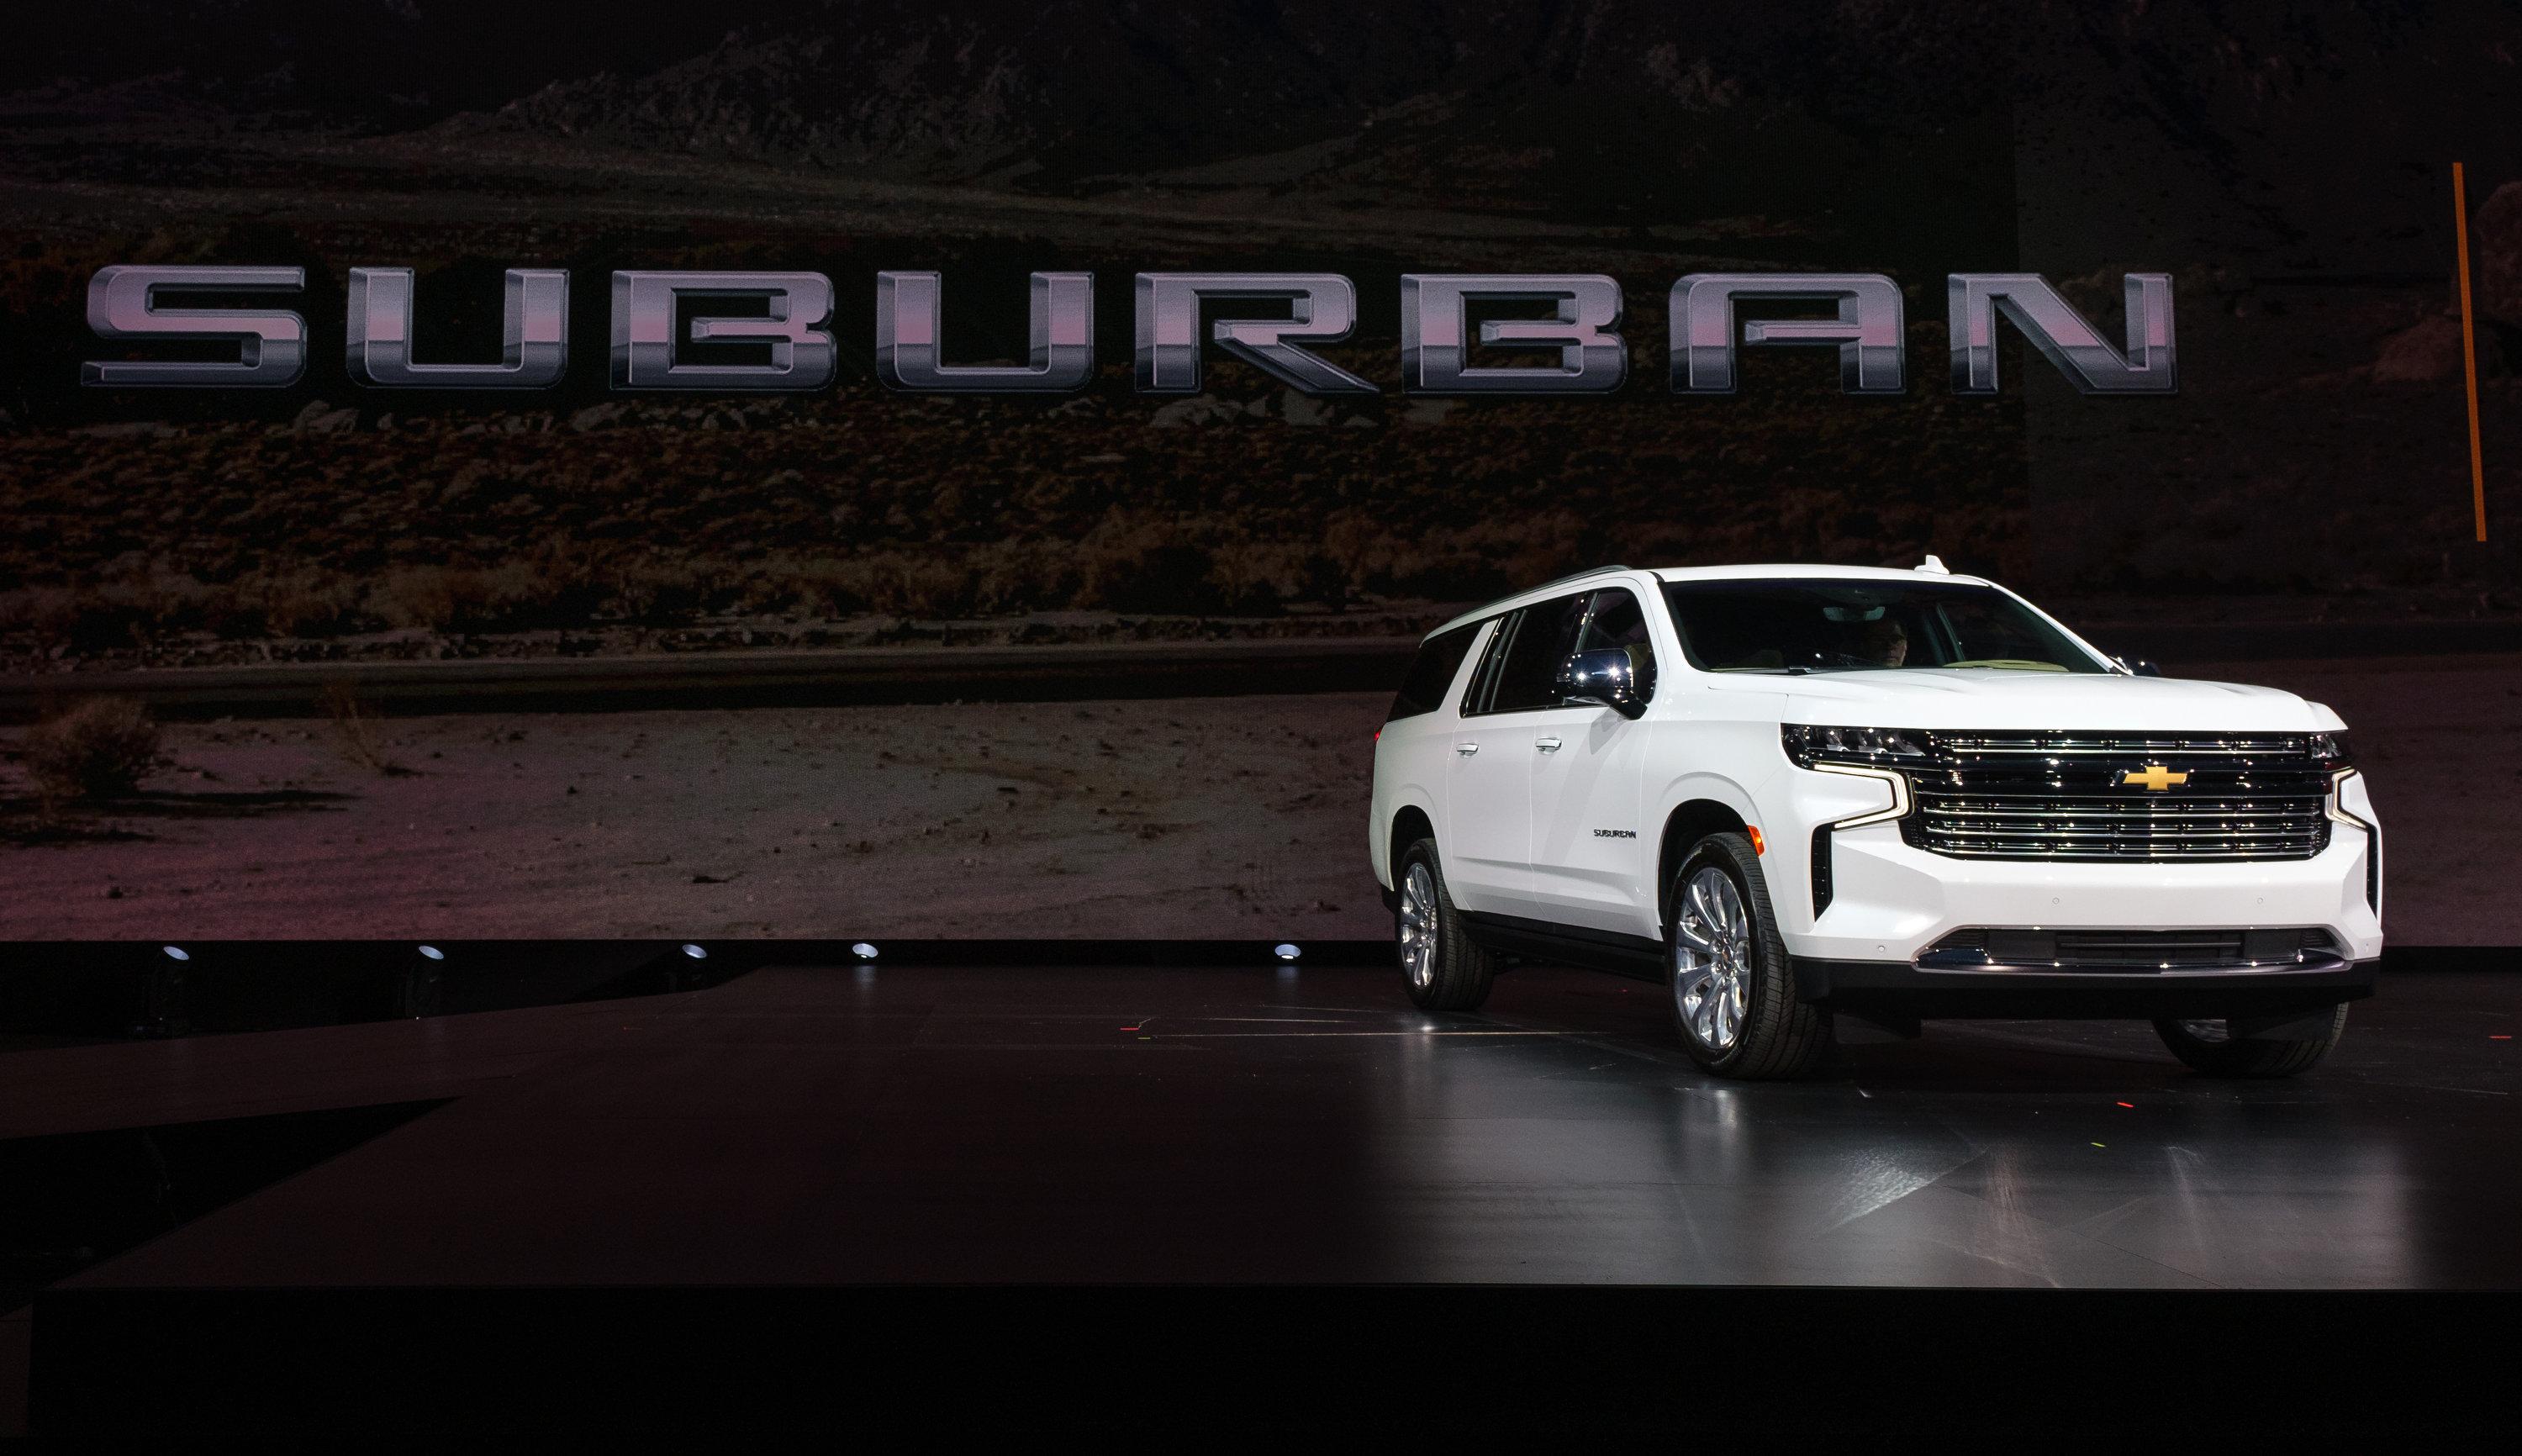 2015 Chevrolet Suburban Premium Outdoors Concept Wallpapers HD   DriveSpark